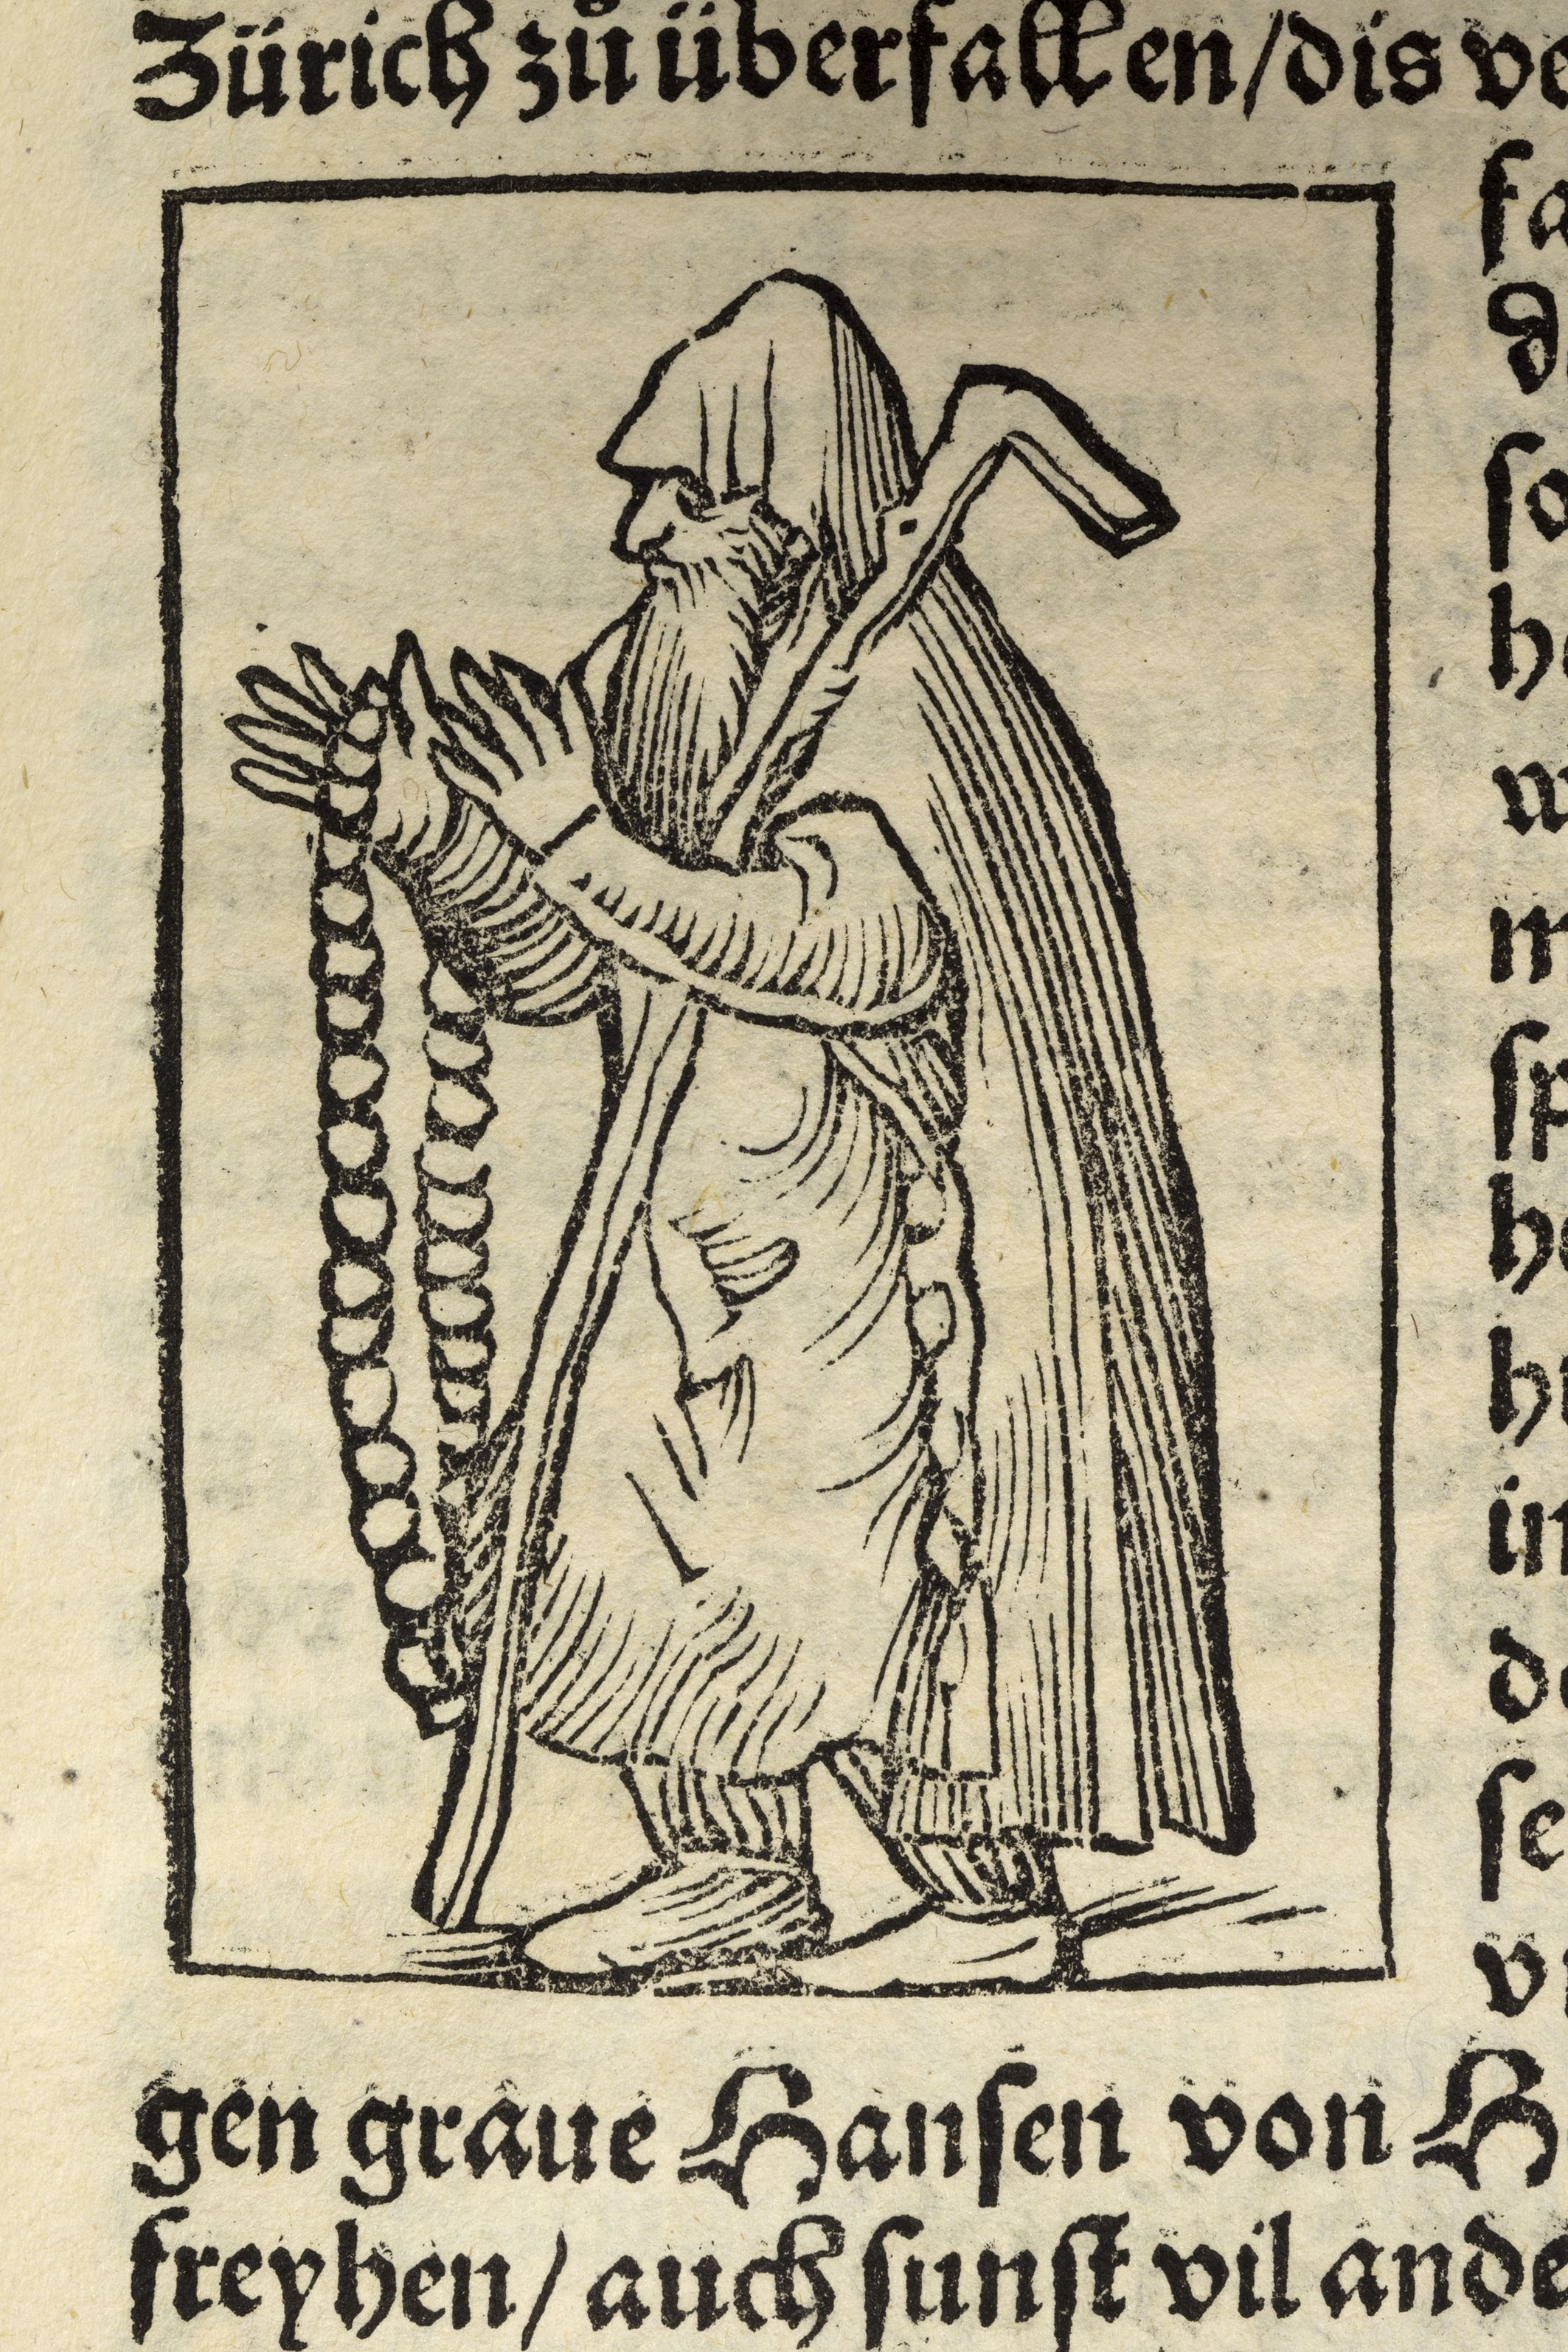 BT3.187.1(2), p.ccxlv, Sebastian M眉nster鈥檚 Cosmographia (1544)